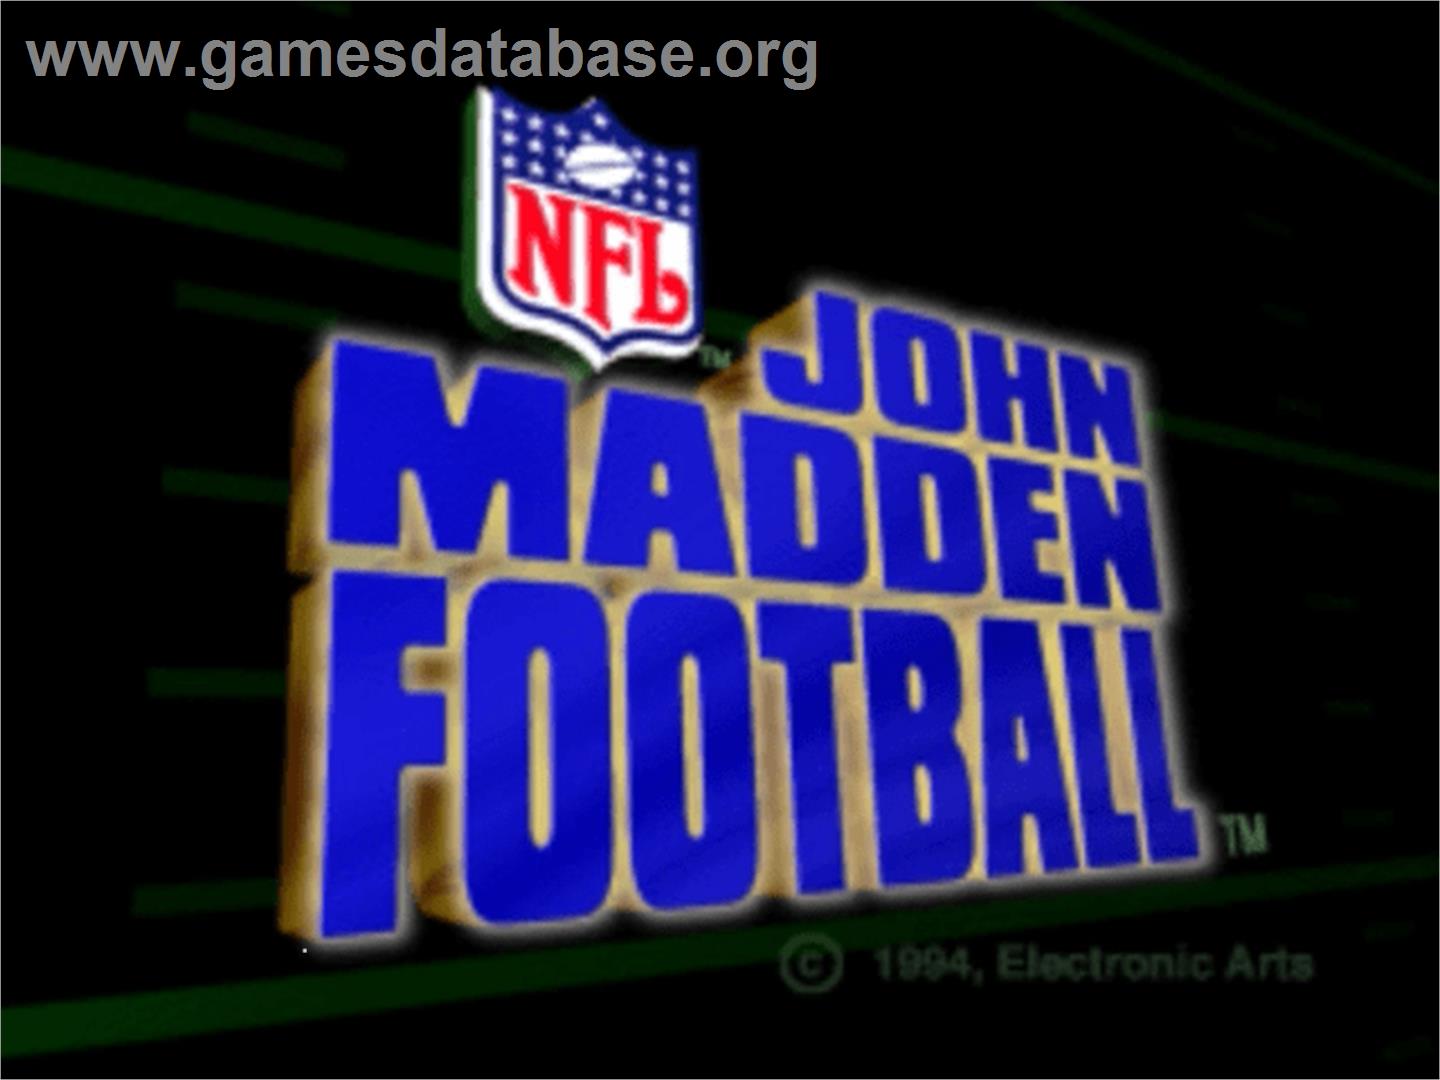 John Madden Football '93 - Panasonic 3DO - Artwork - Title Screen